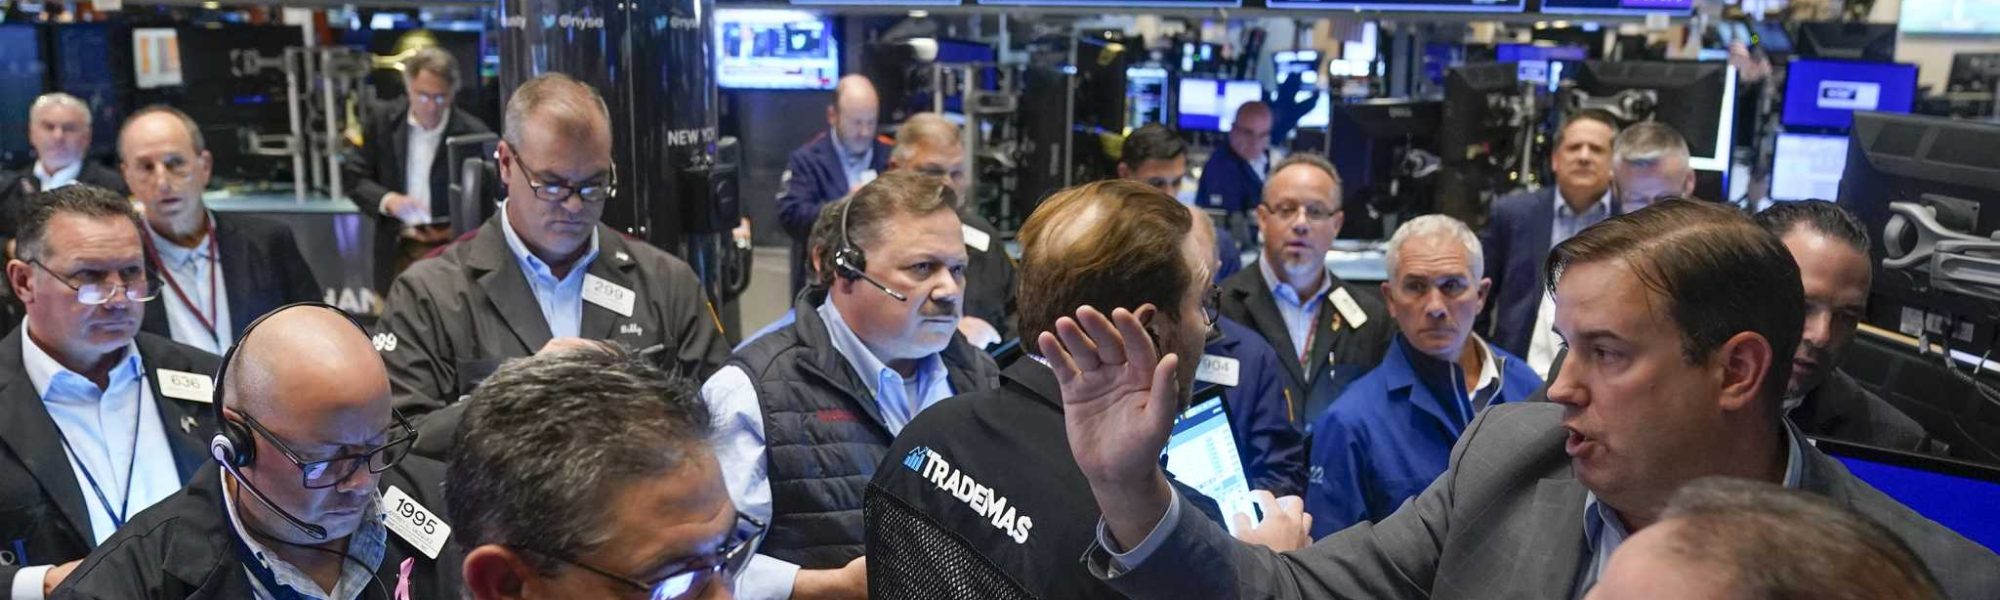 Stocks slump as Wall Street’s big rally fades, yields rise